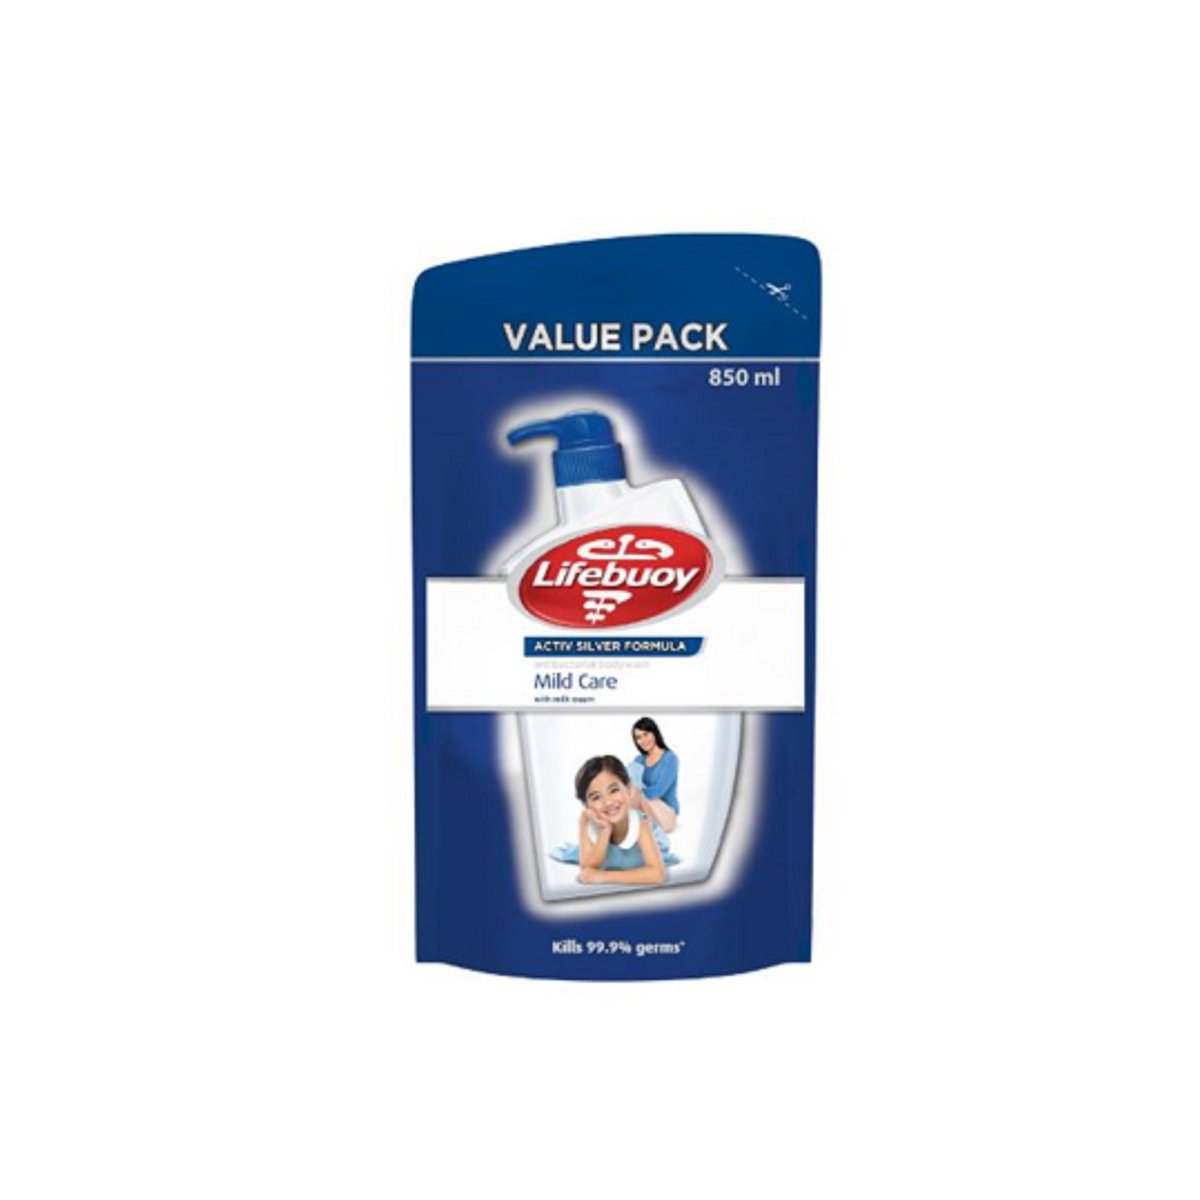 Lifebuoy Body Wash Mildcare Refill Mysg 850ml